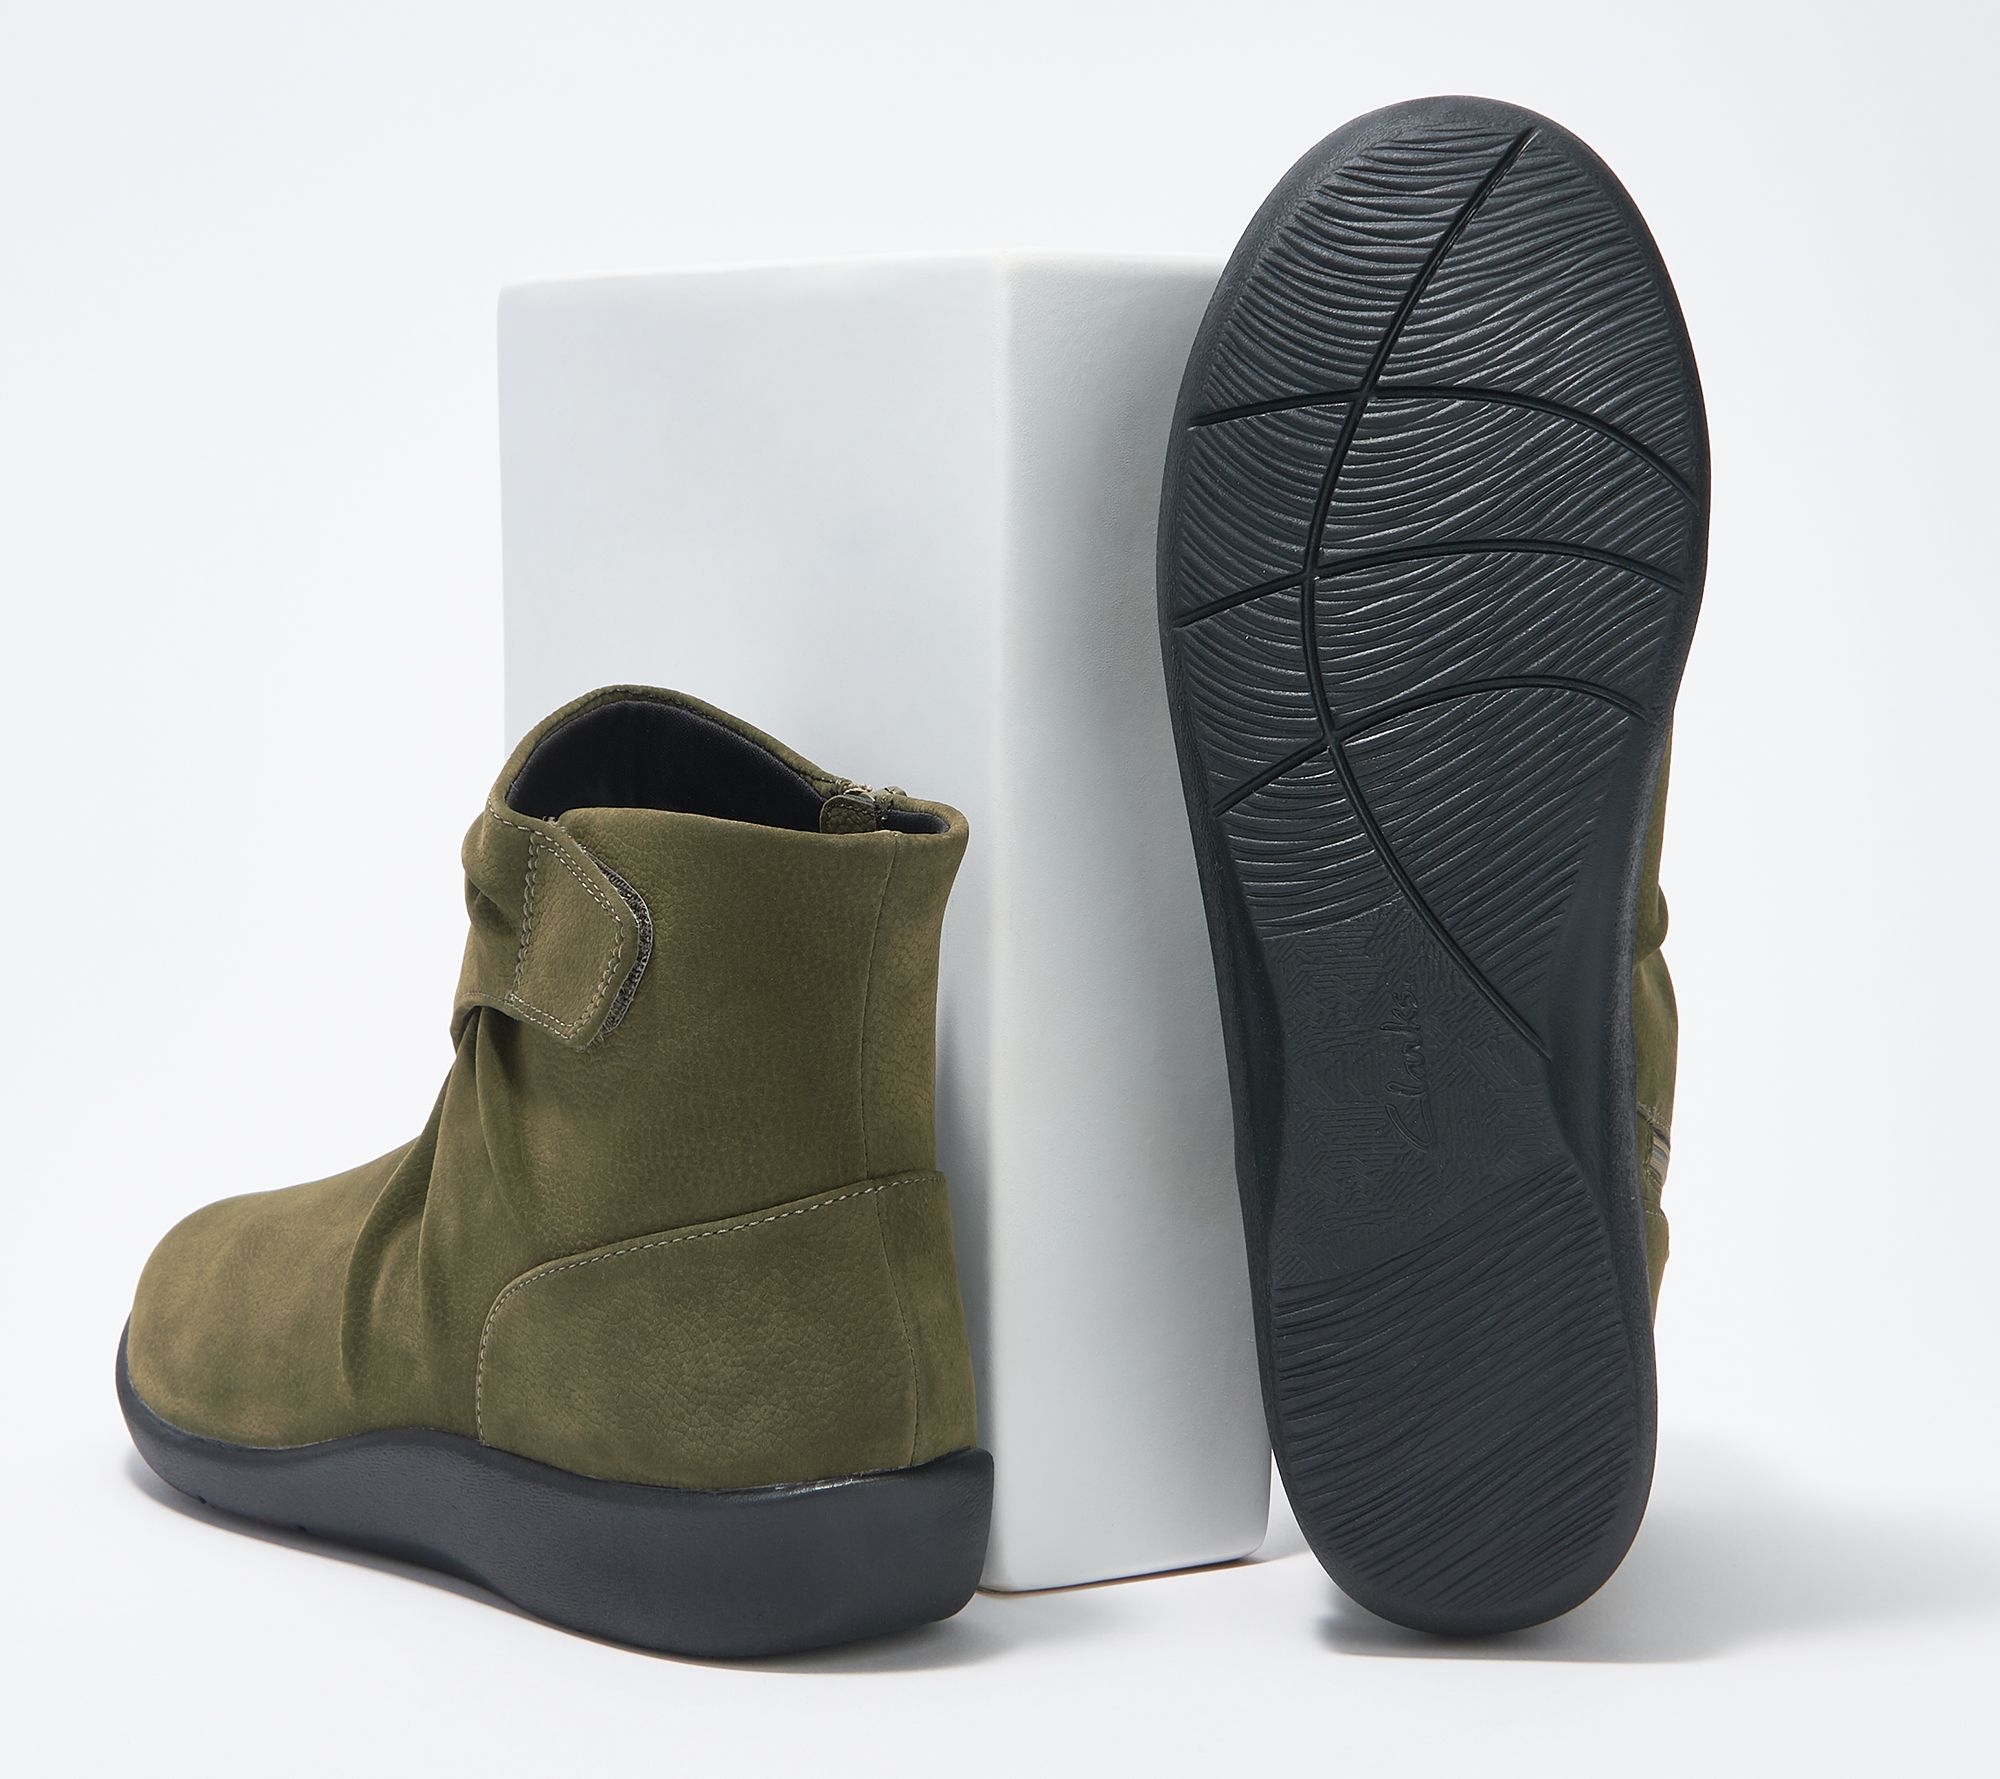 clarks sillian boots